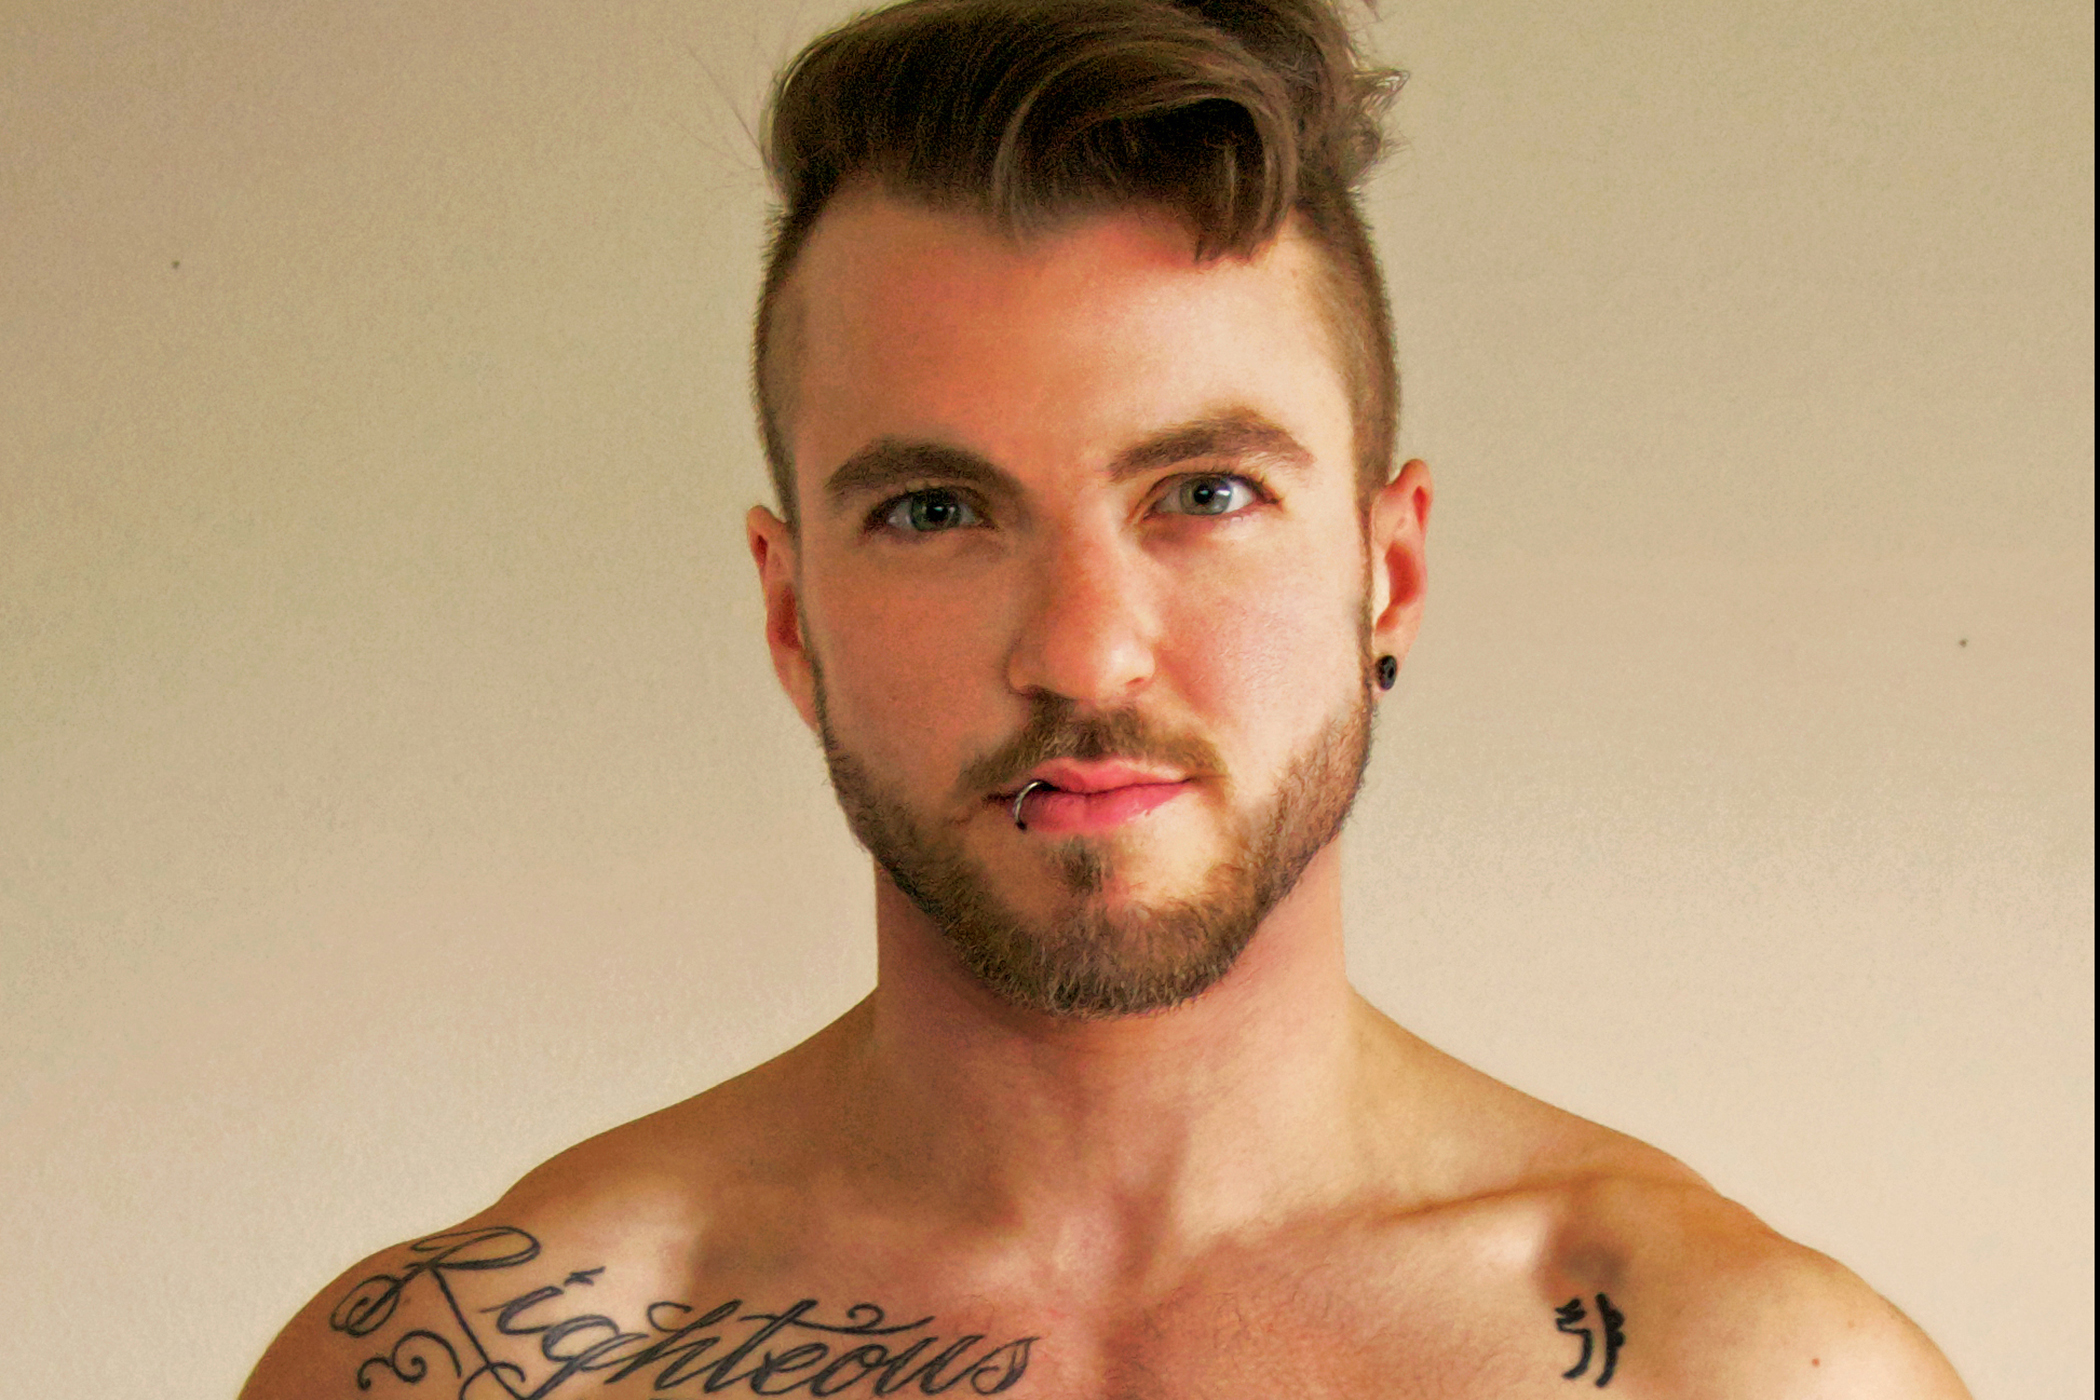 Transvestites Clothed And Nude - Transgender model recreates nude Adam Levine photo